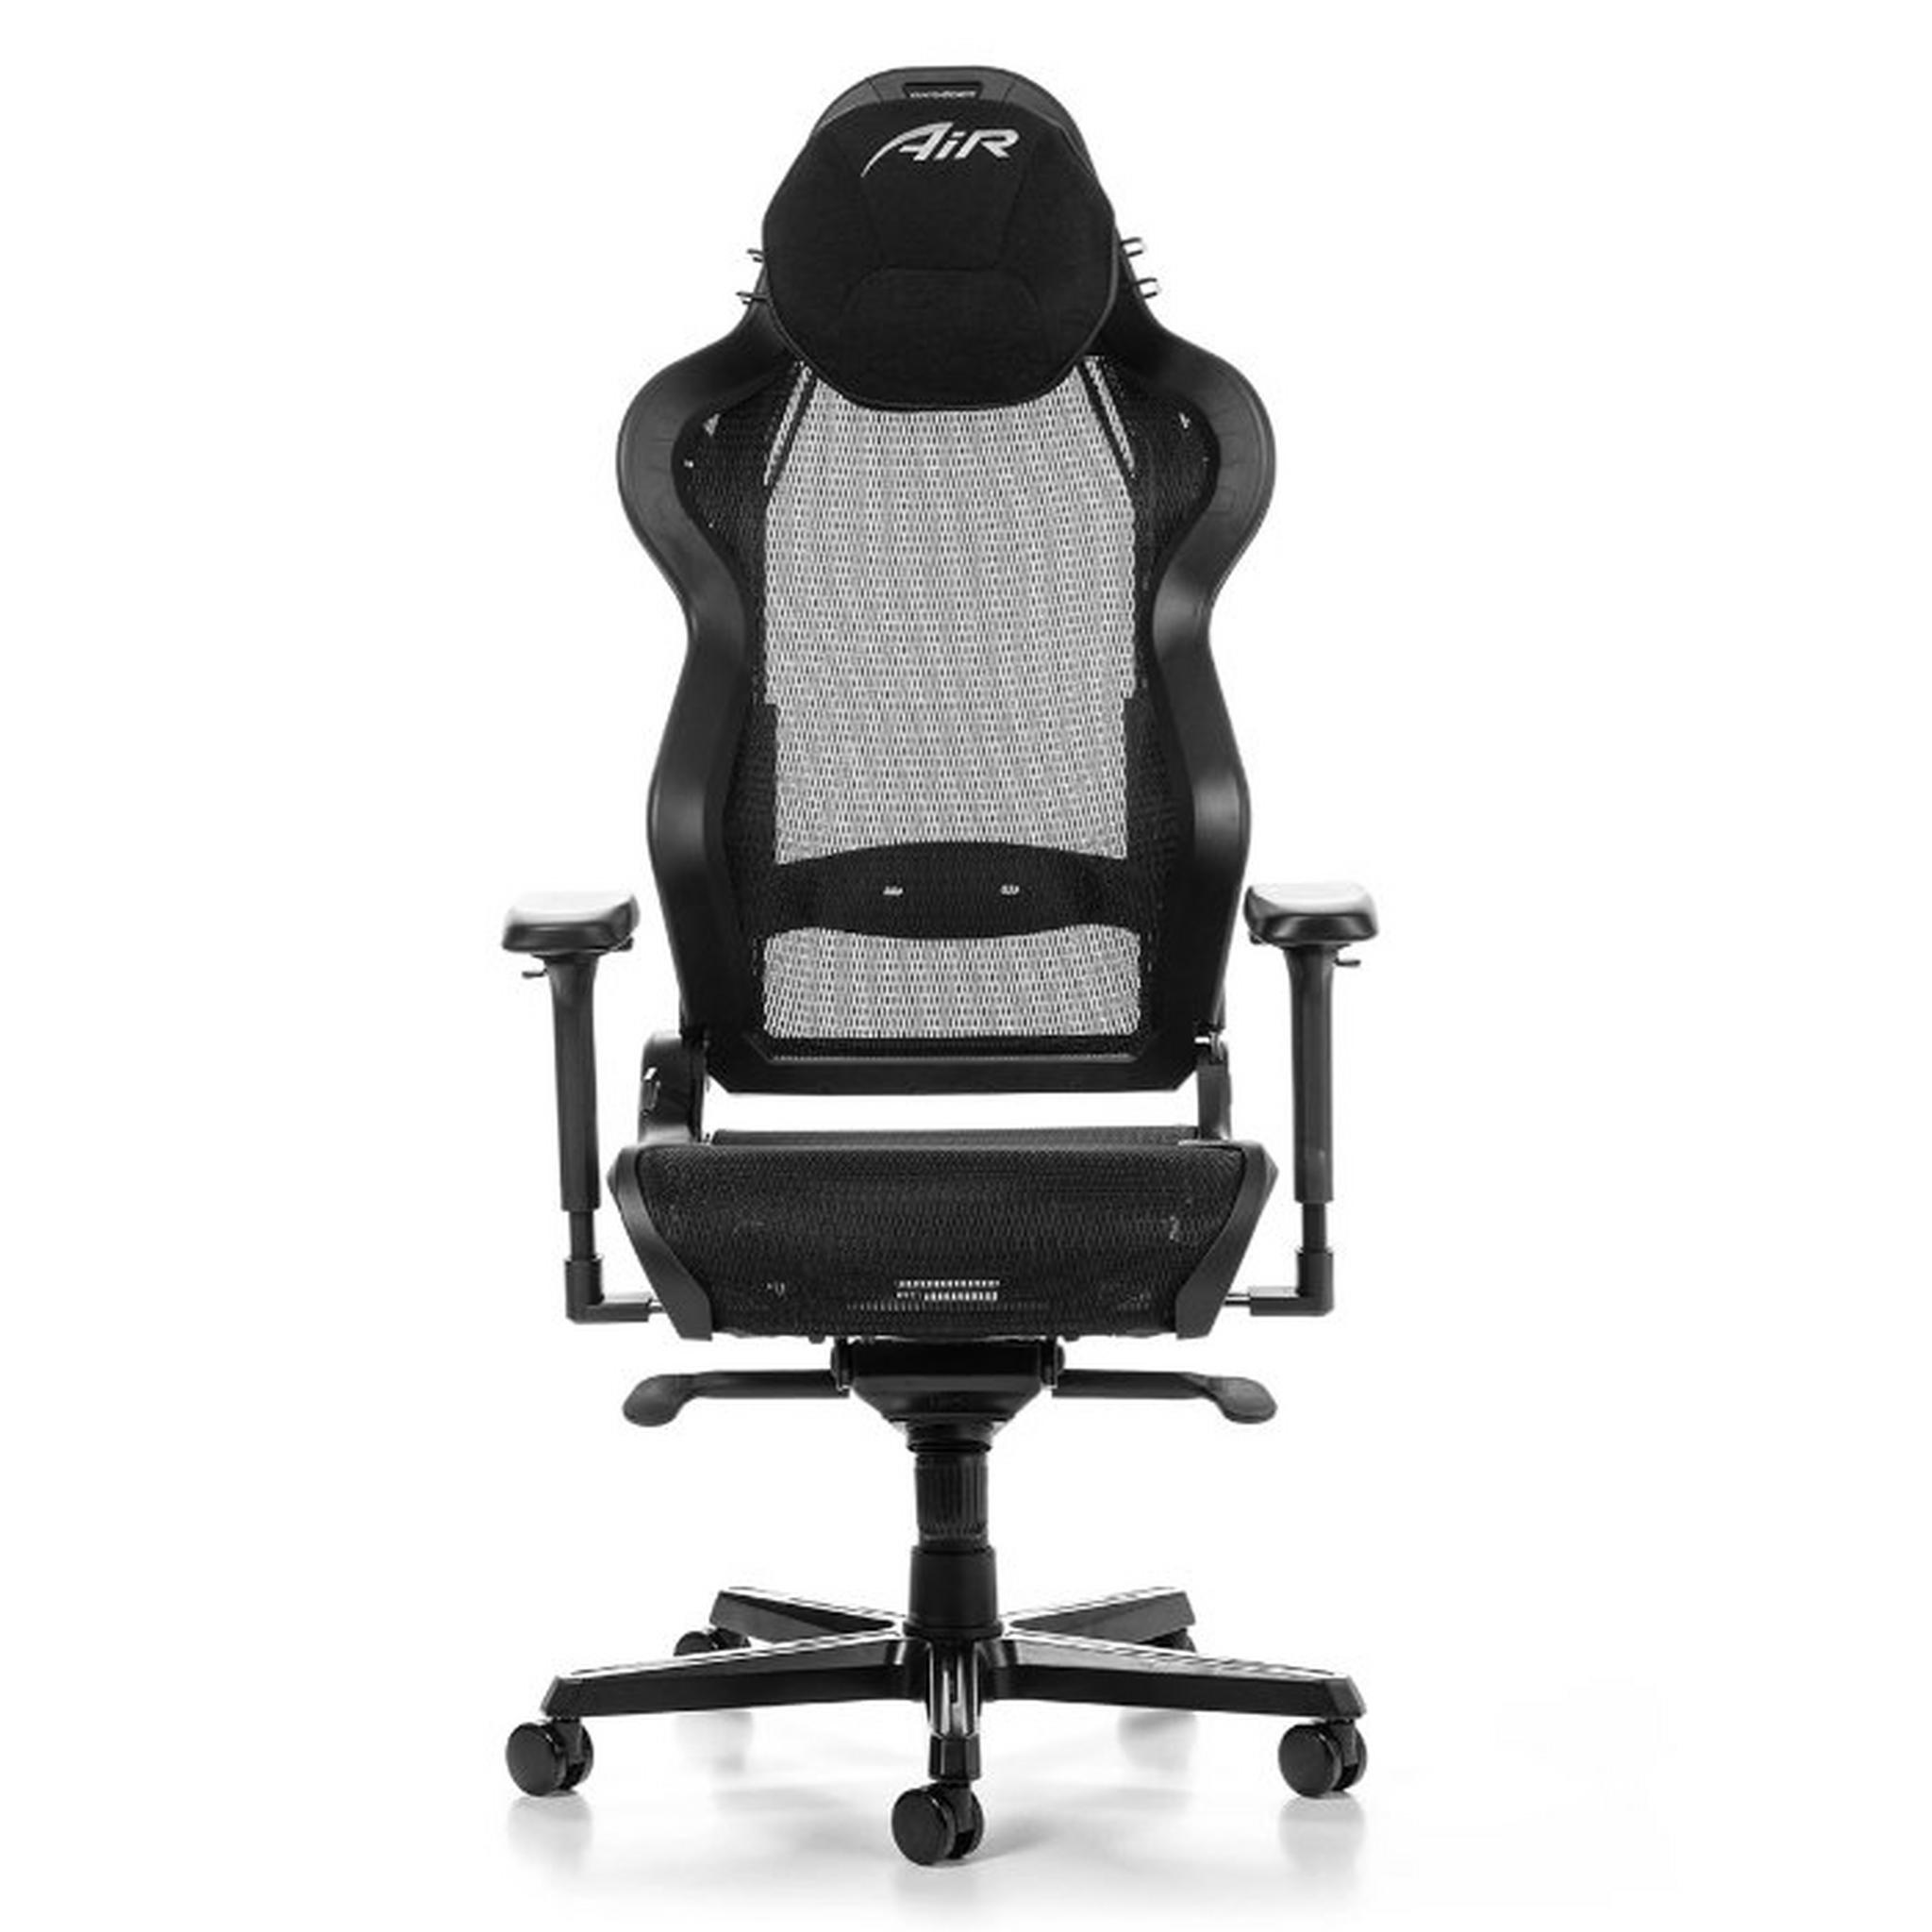 DX Racer Air Pro Series Gaming Chair, AIR-R1S-N.N-B4 – Black